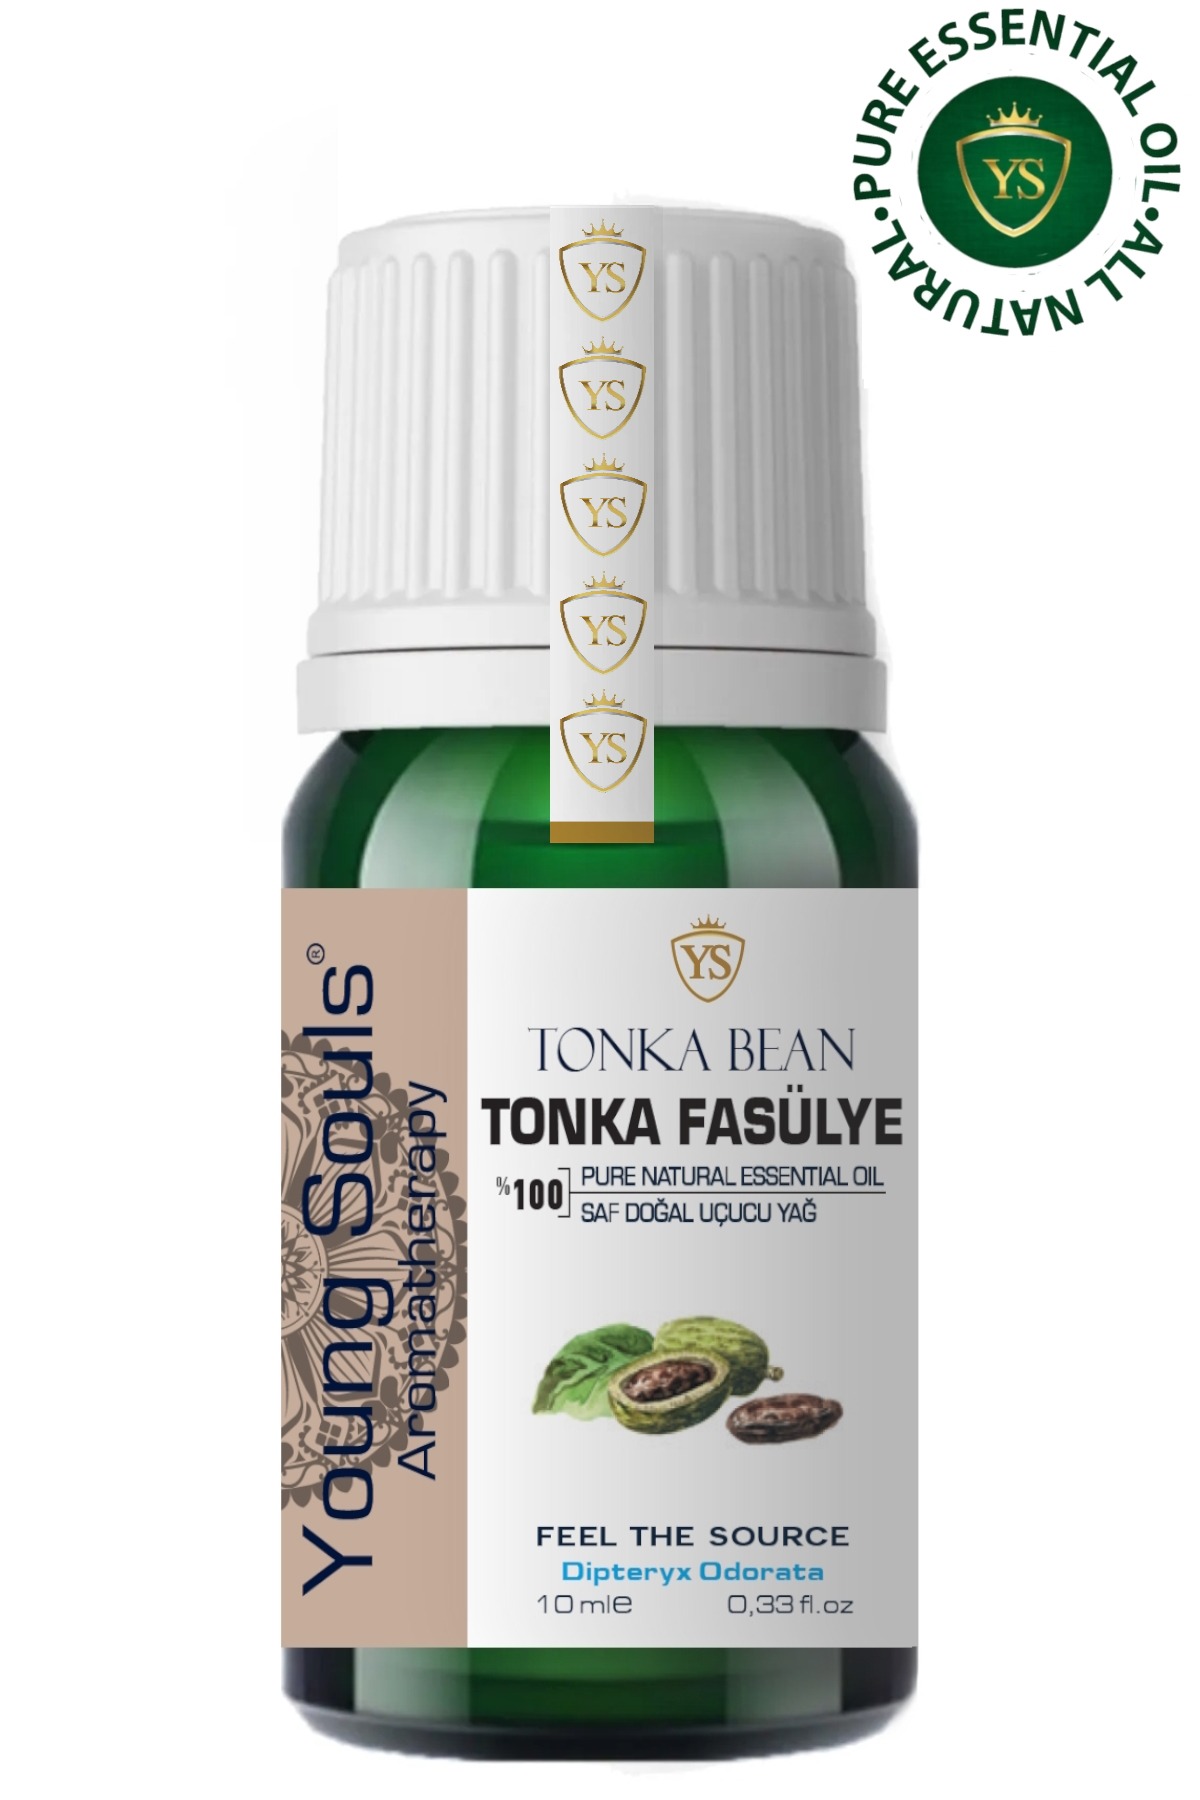 Young Souls Aromatherapy Tonka Bean Essential Oil Tonka Fasülye Uçucu Yağ  10 ml